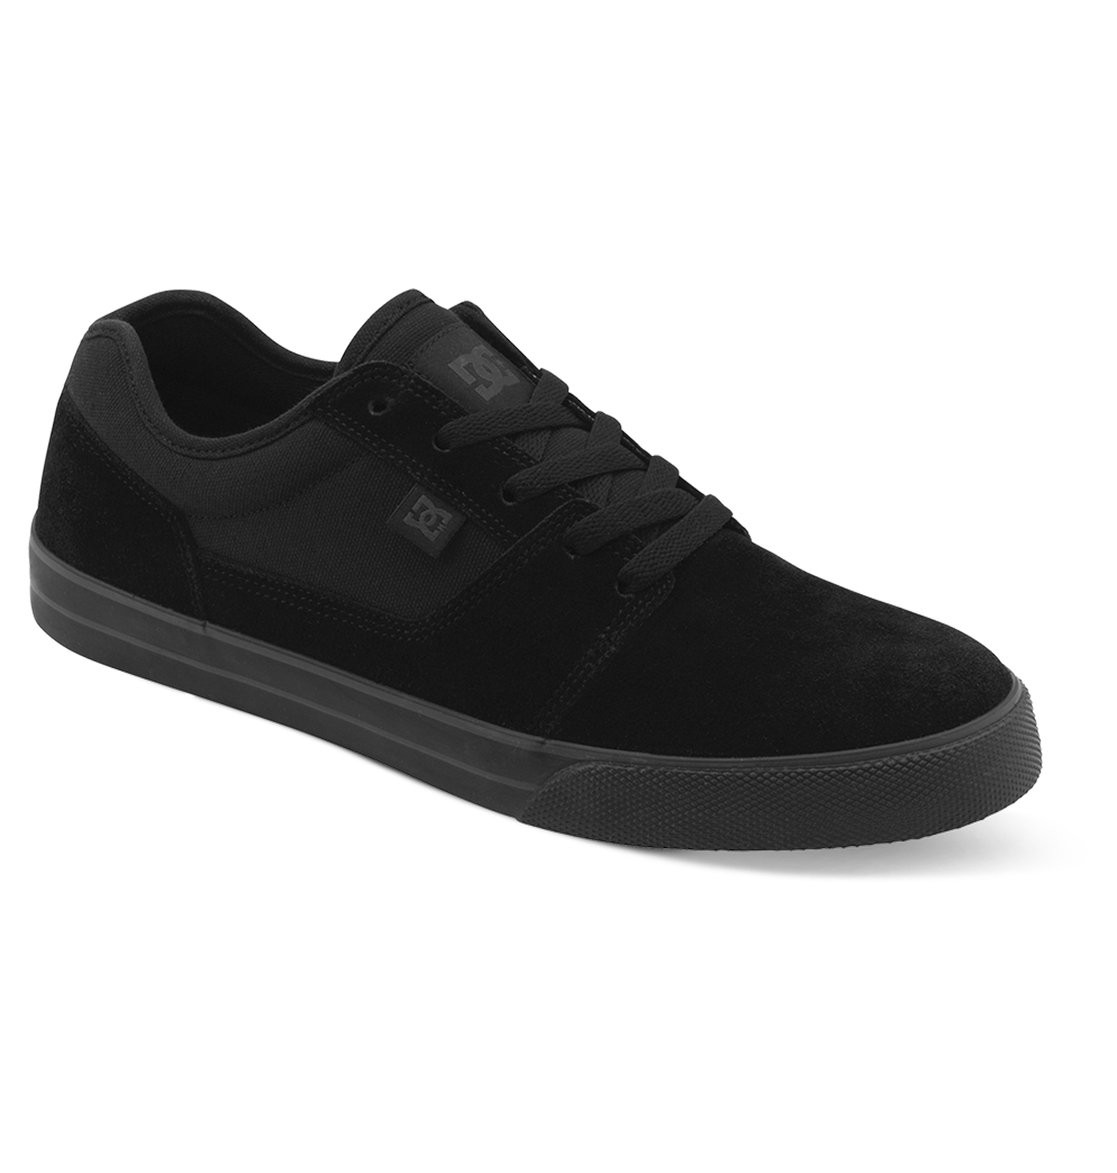 Sneakers DC Tonik black/black 